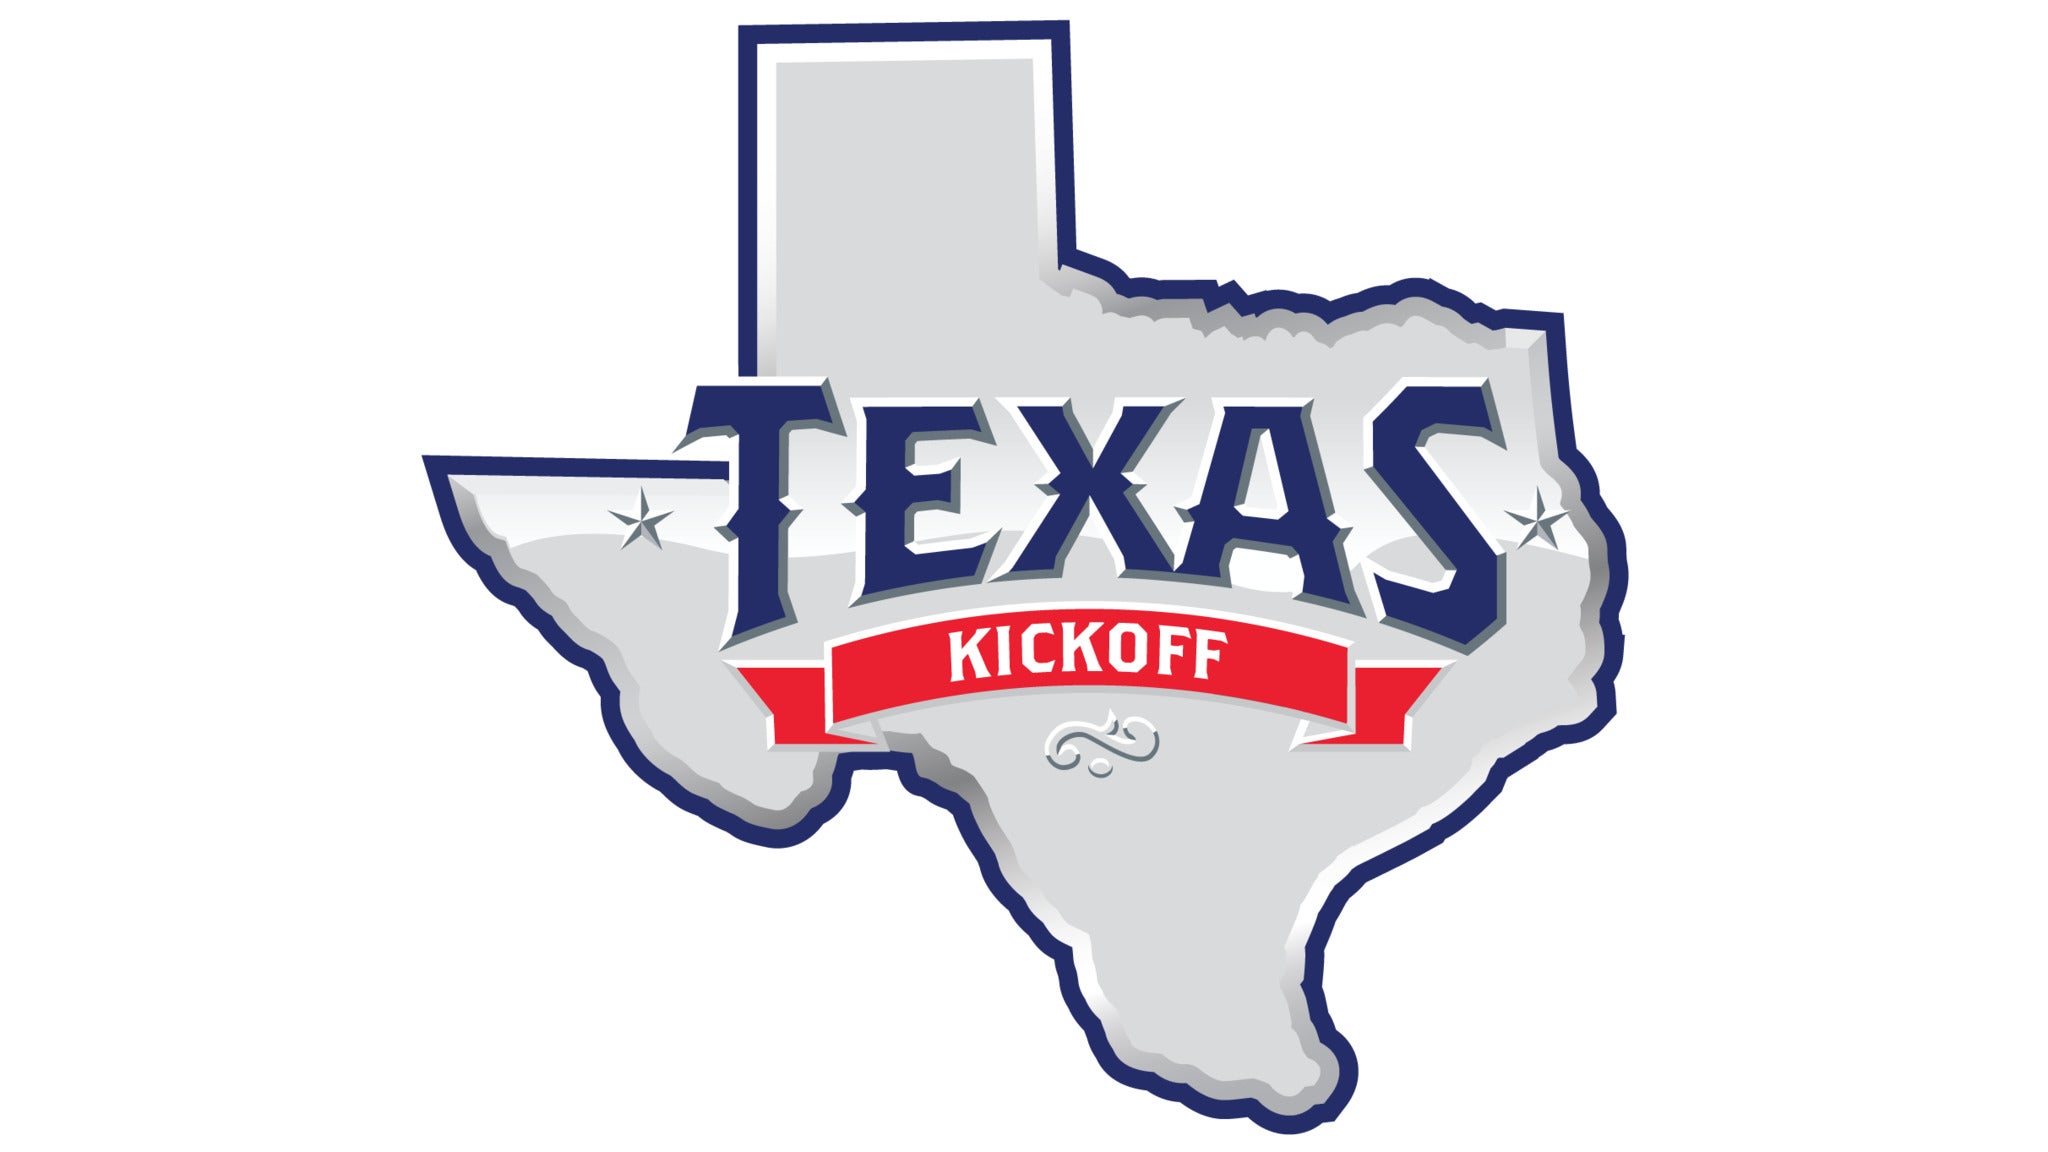 Texas Kickoff in Houston promo photo for LSSE Presales presale offer code